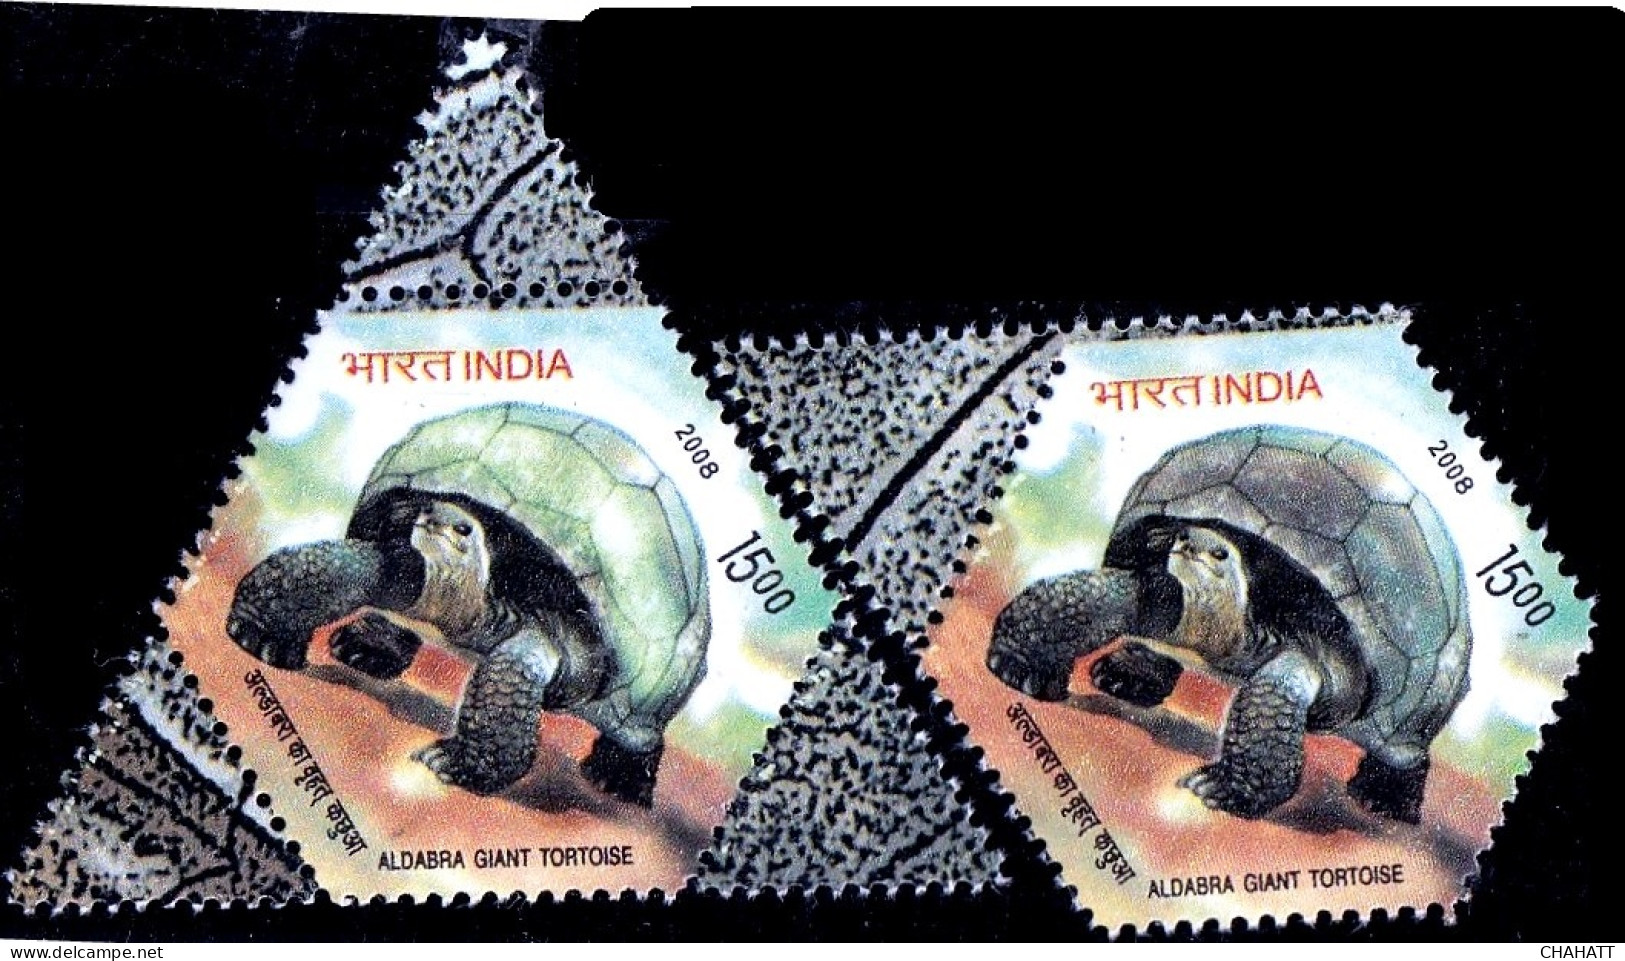 INDIA-2008-ALDABRA GIANT TORTOISE- ODD SHAPED X2-ERROR- COLOR DRYPRINT- MNH- IE-59 - Variétés Et Curiosités